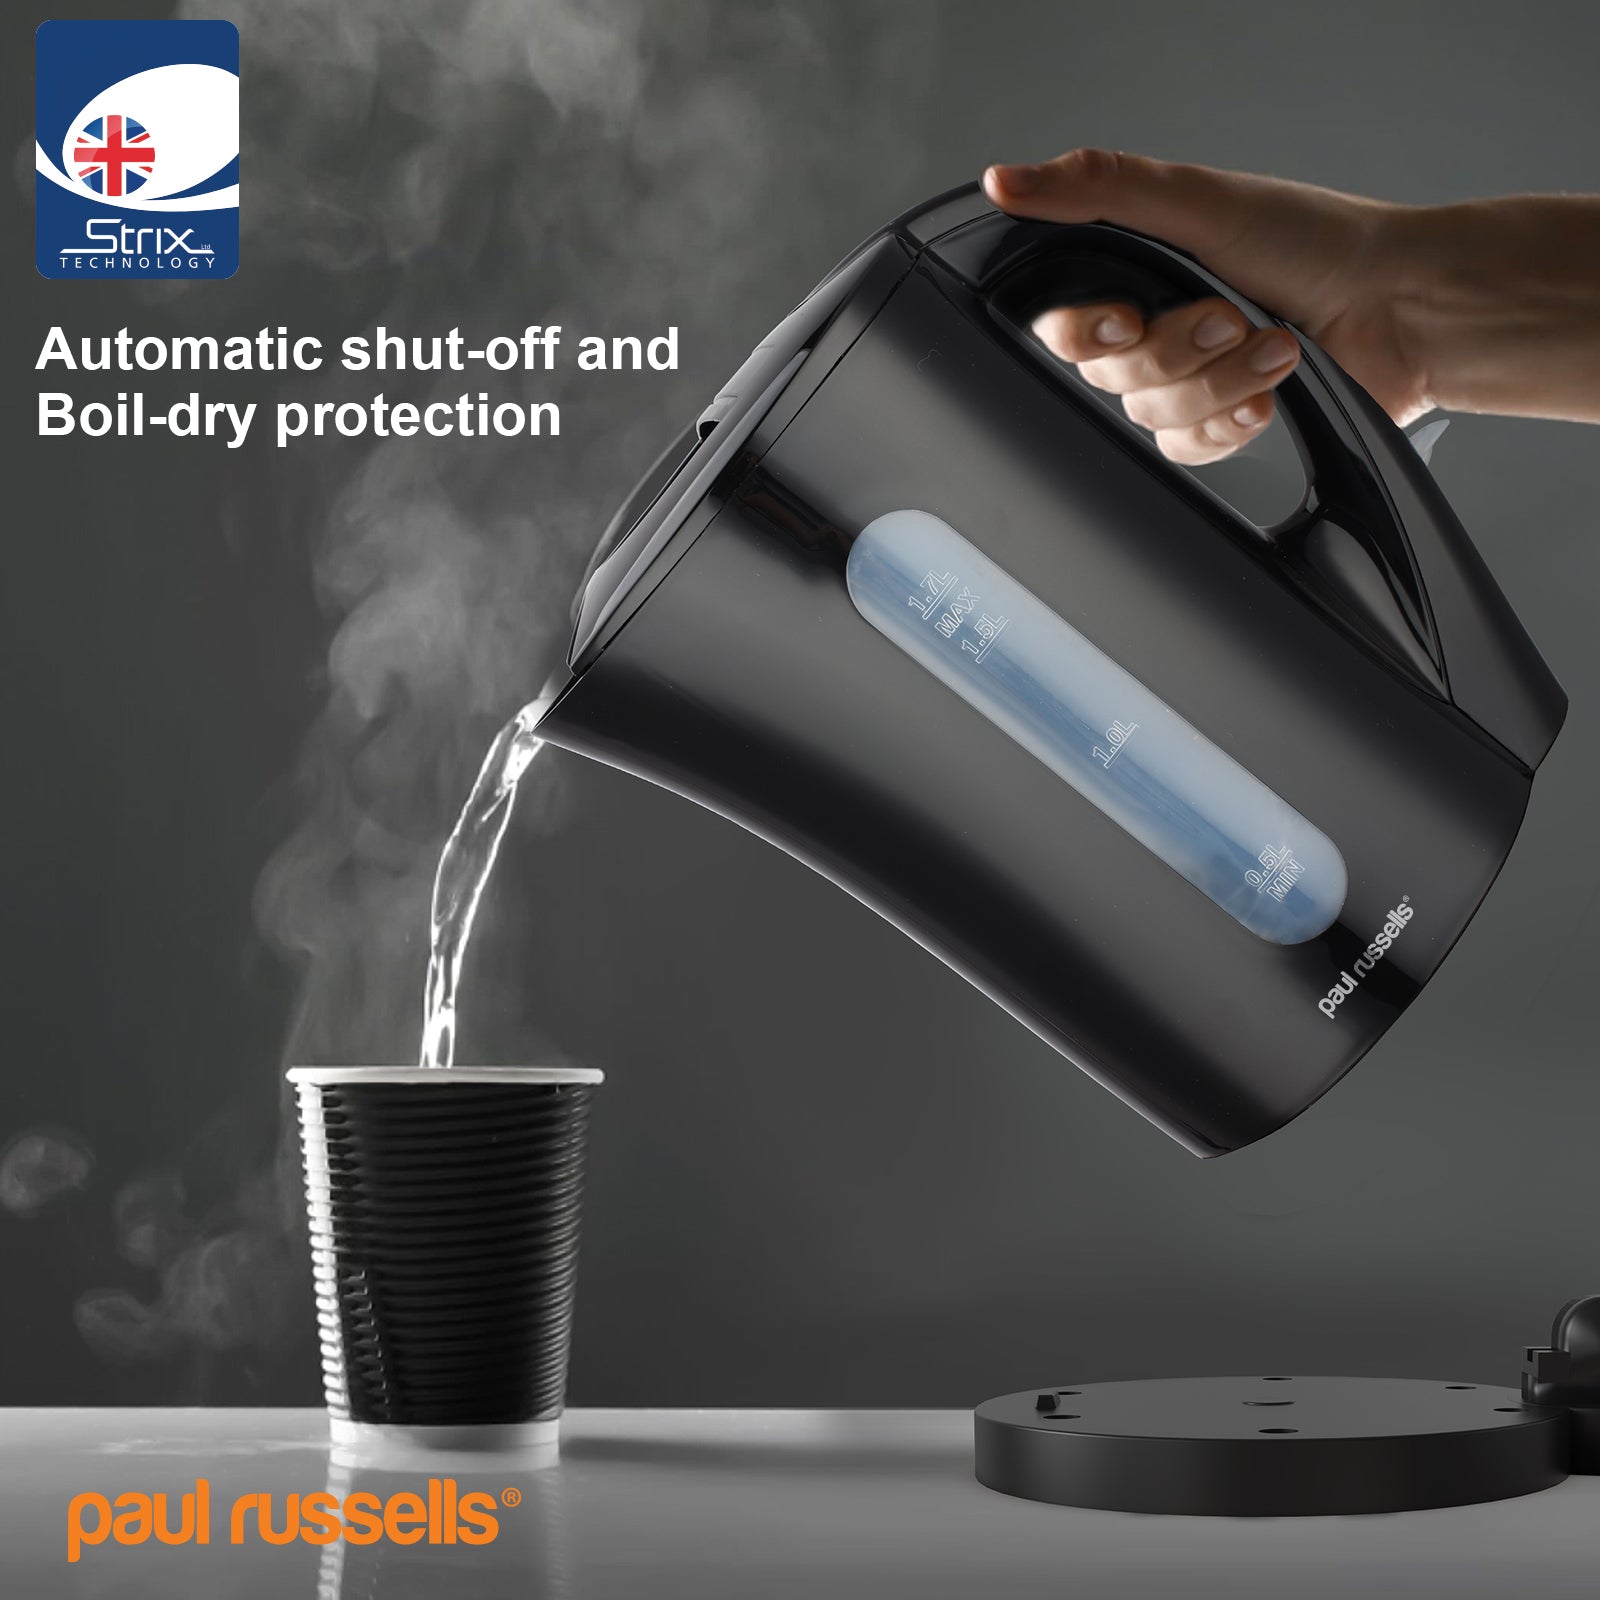 Electric Plastic Kettle, 2200W 1.7L, Hot water dispenser, Black Boil-Dry Protection, Auto Shut off Stirx Control